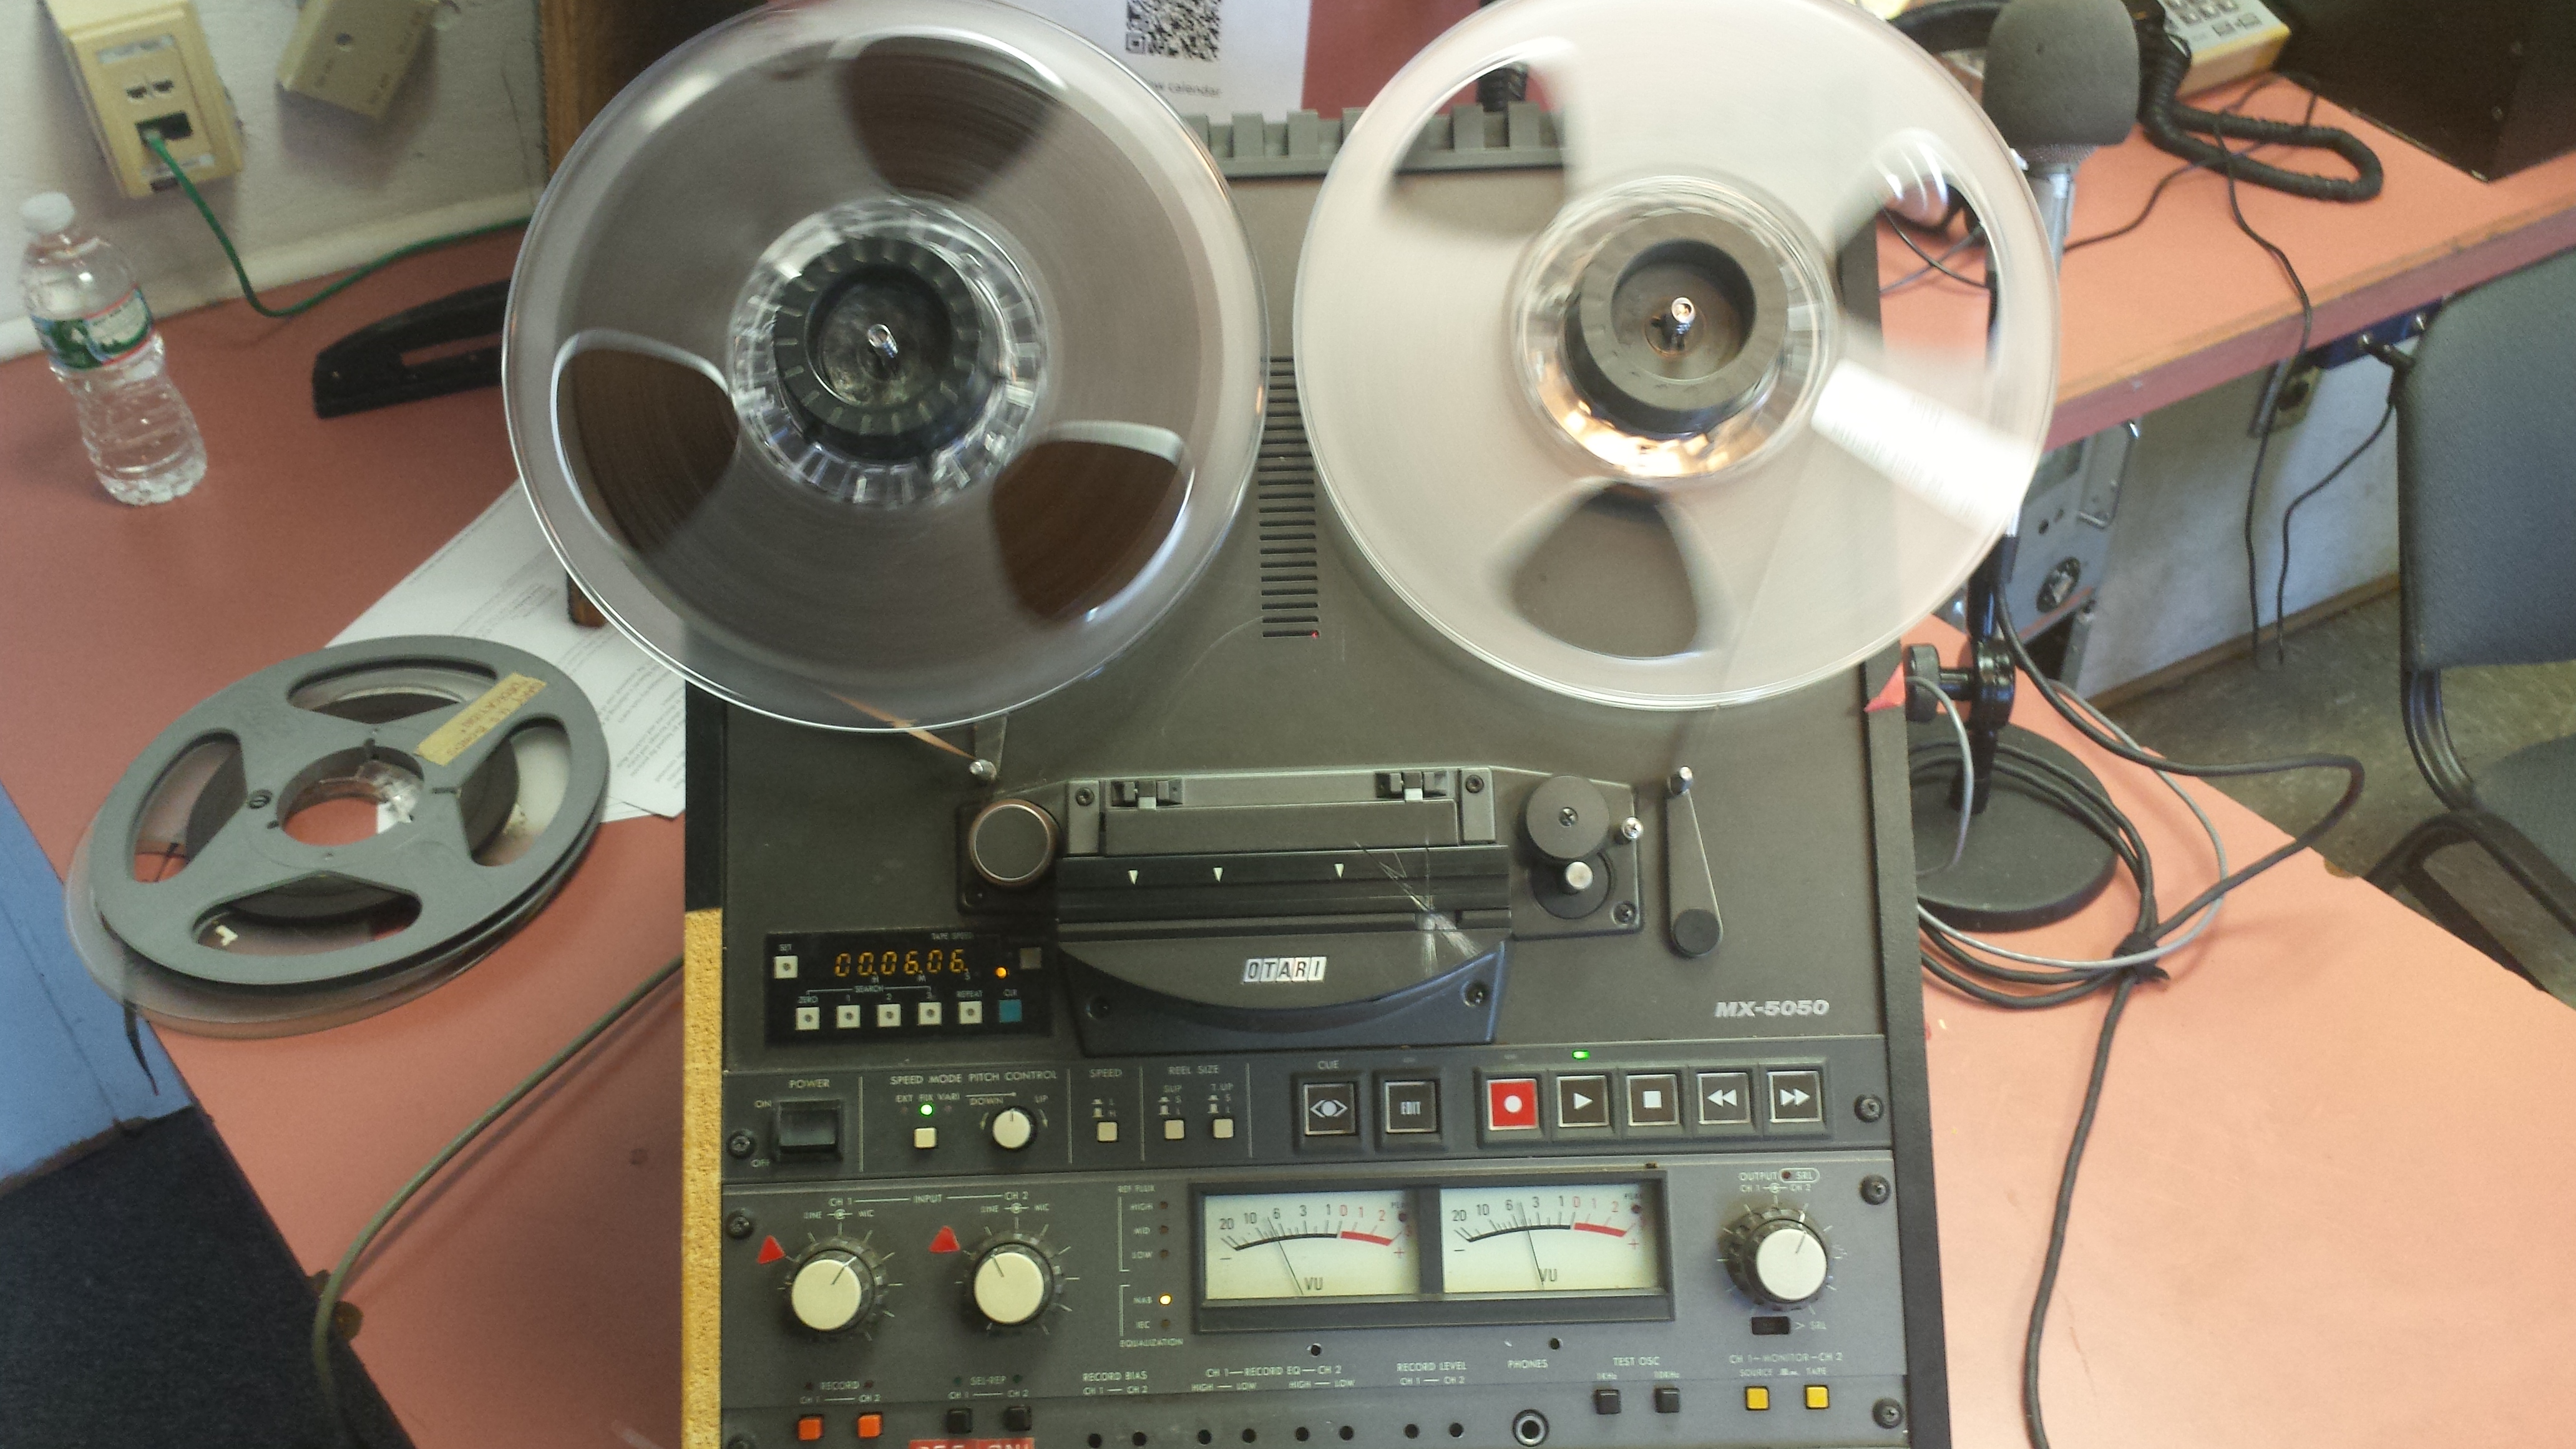 2014 - A Reel to Reel Machine - Copying Analog Tape to Digital